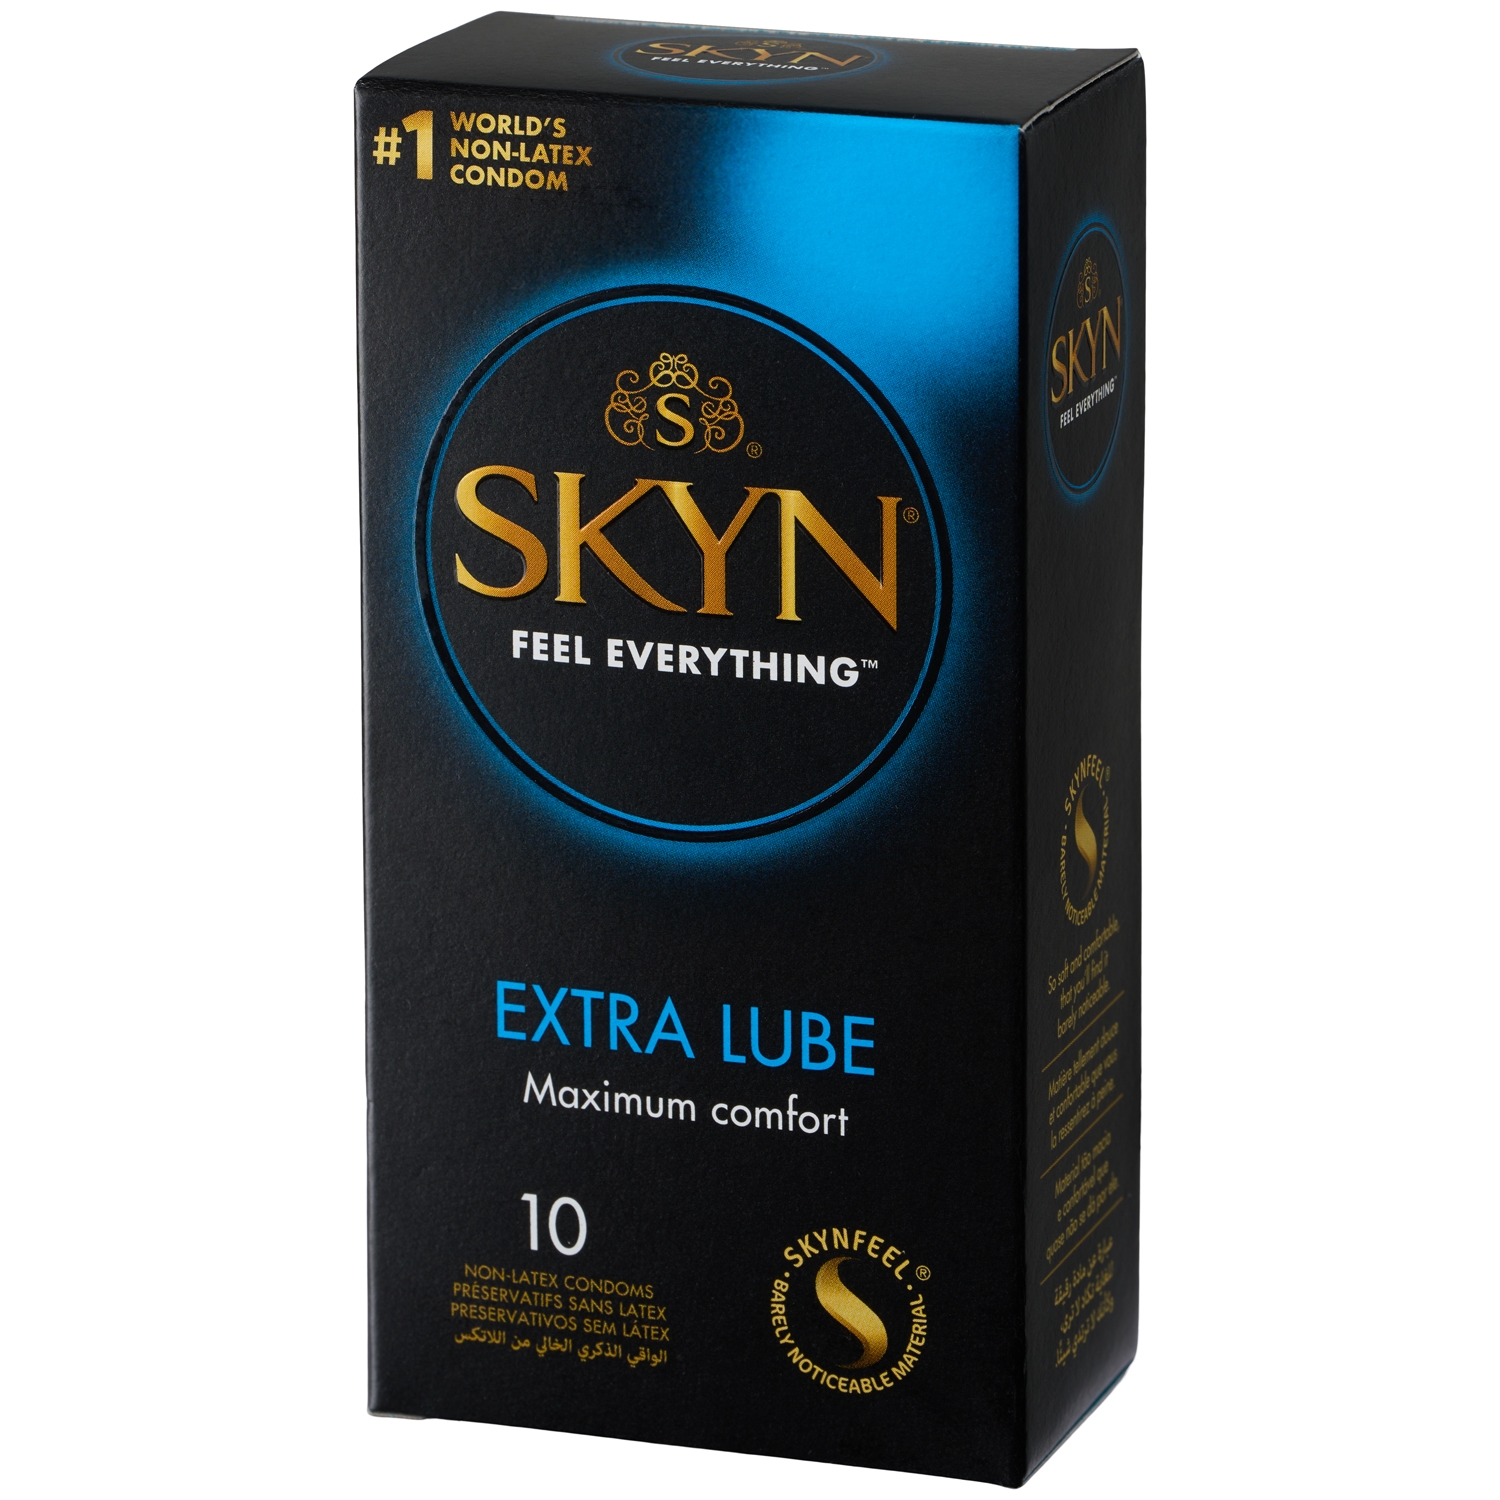 Skyn Extra Lube Latexfri Kondomer 10 stk - Klar